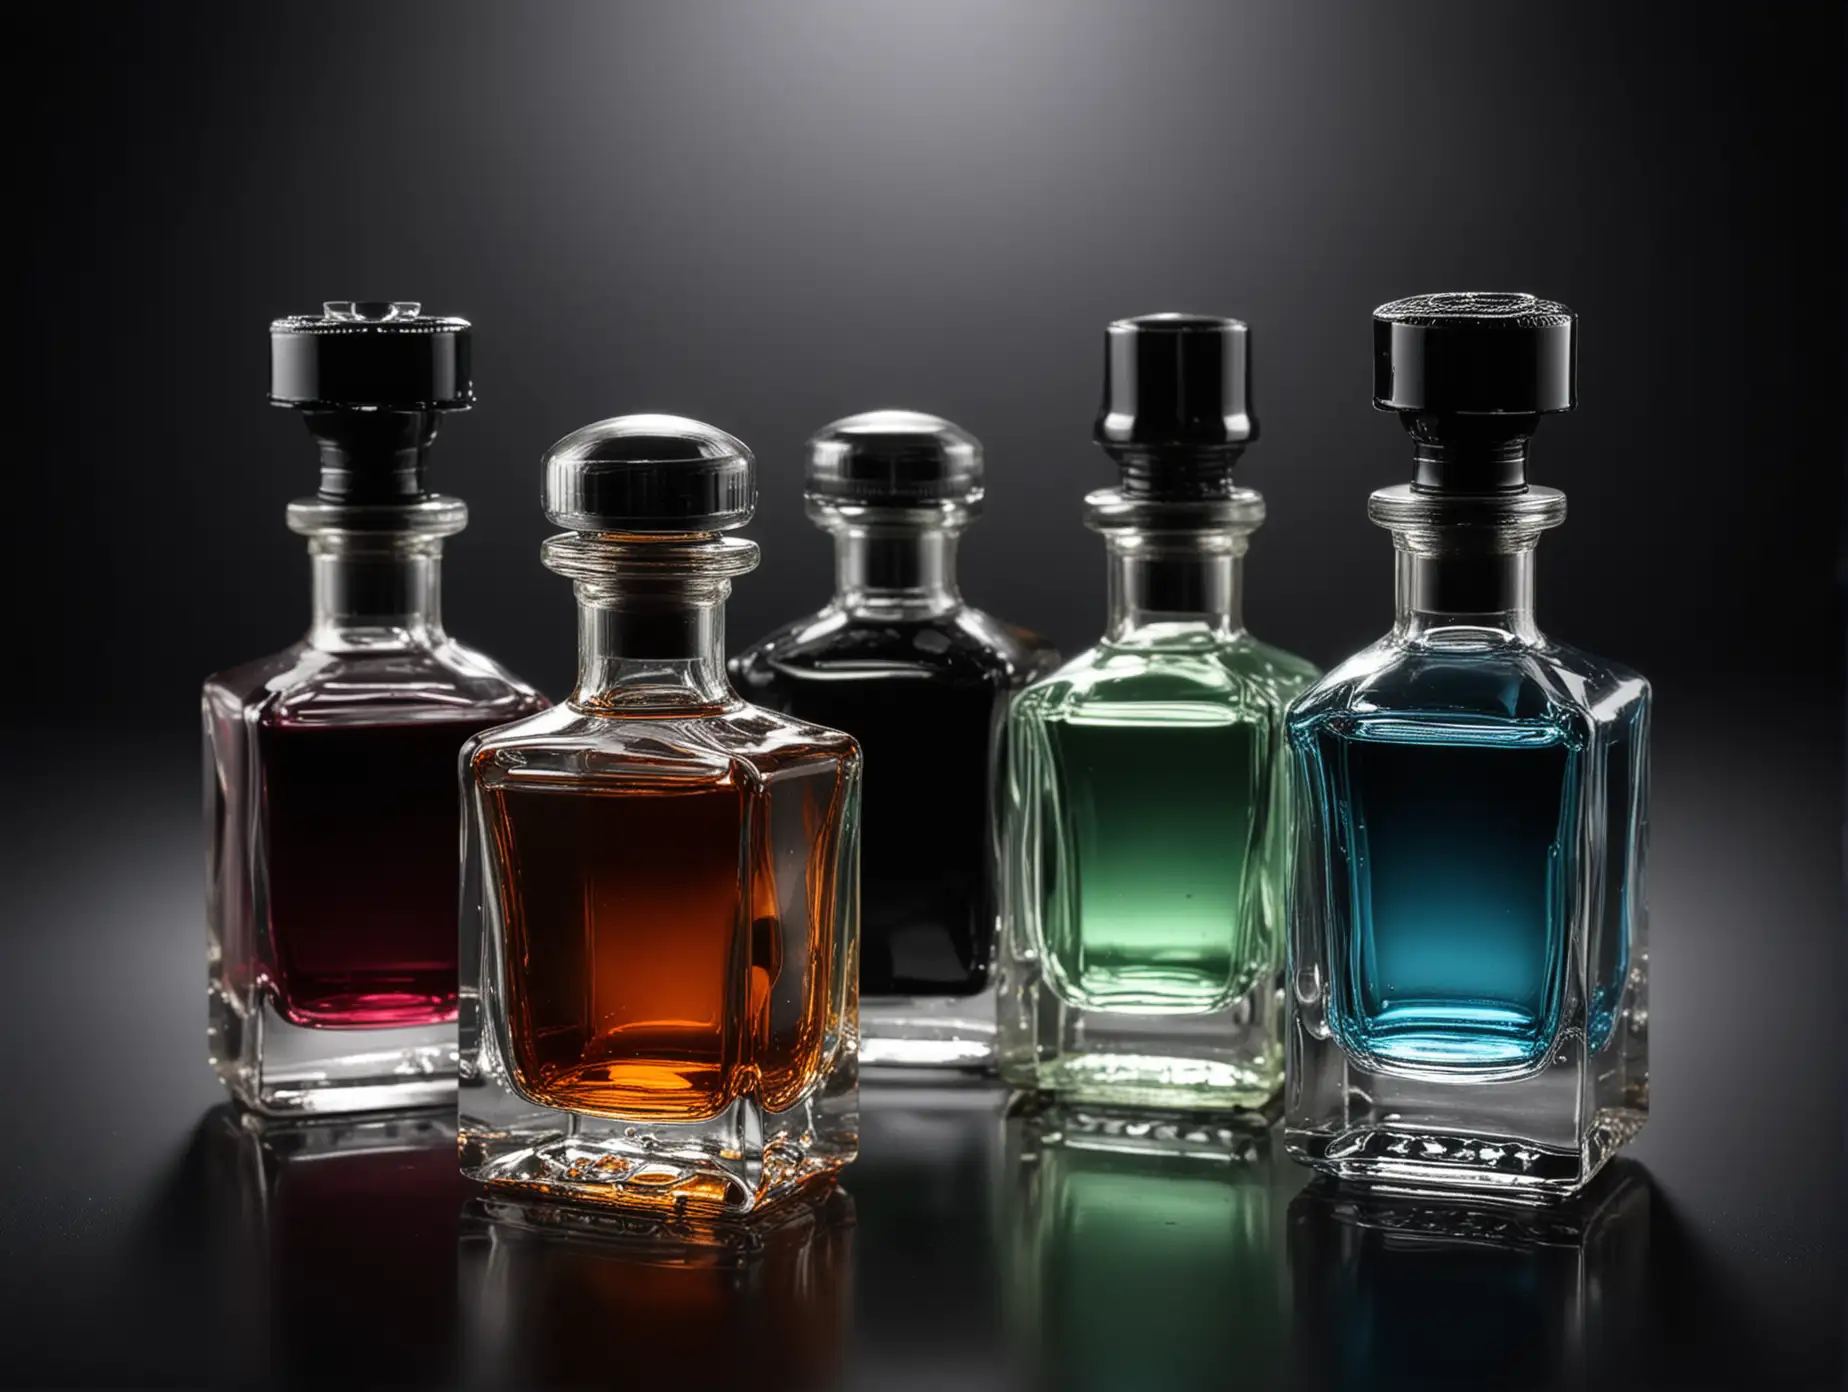 Shiny Perfume Bottles with Colorful Liquids on Black Background